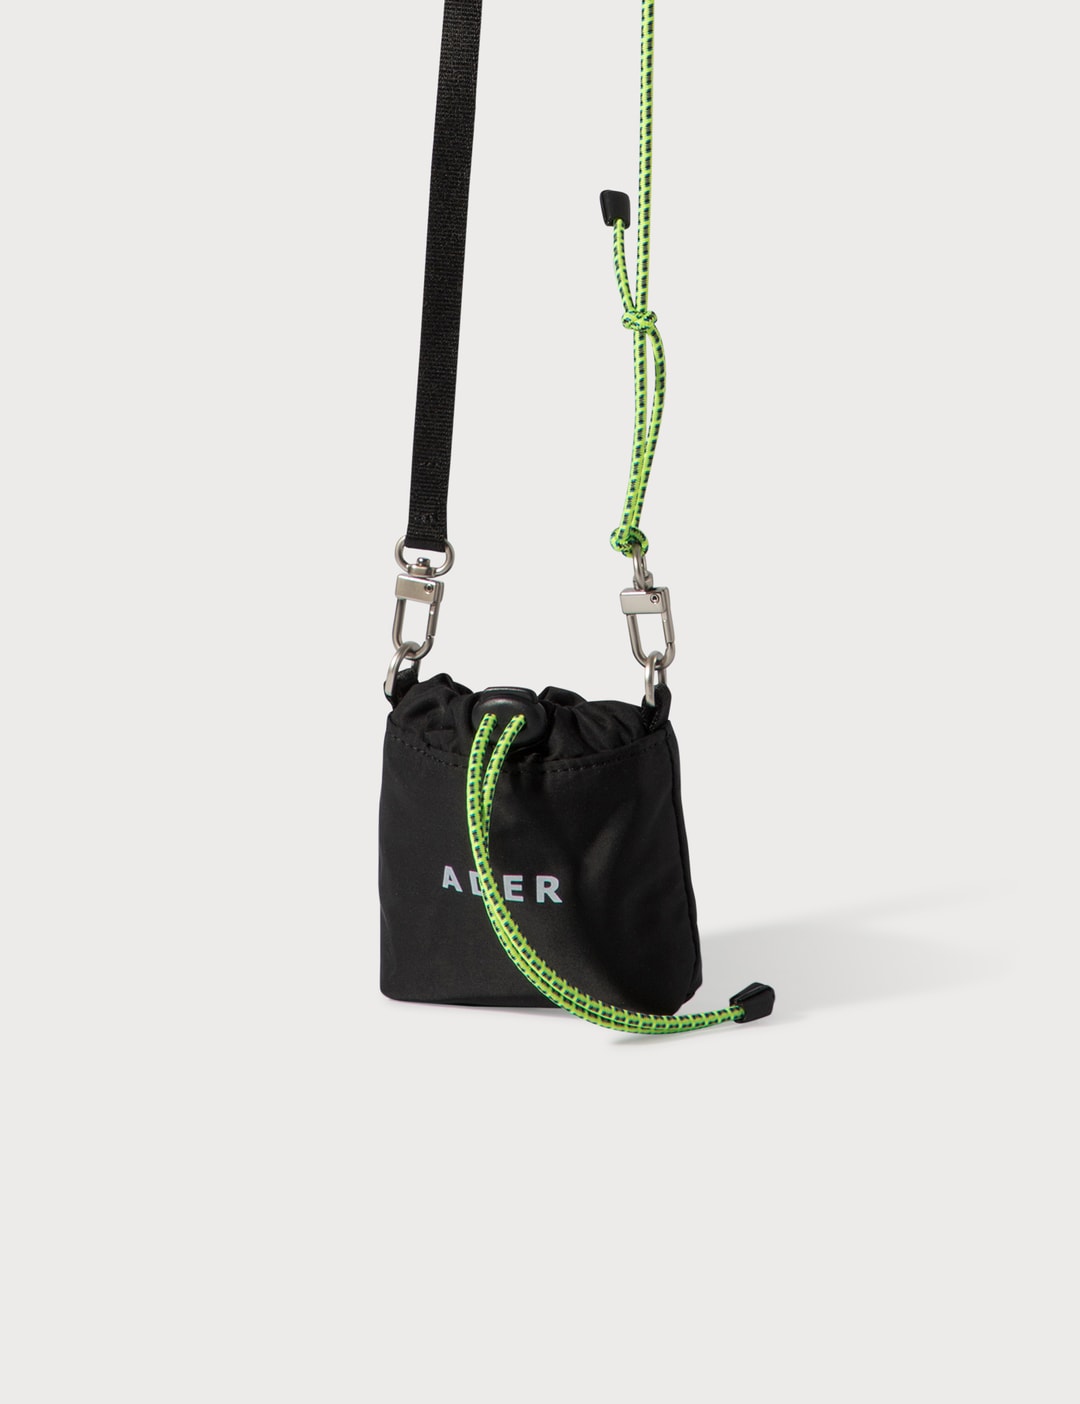 Ader Error - Mini Pocket Bag  HBX -  ハイプビースト(Hypebeast)が厳選したグローバルファッション&ライフスタイル